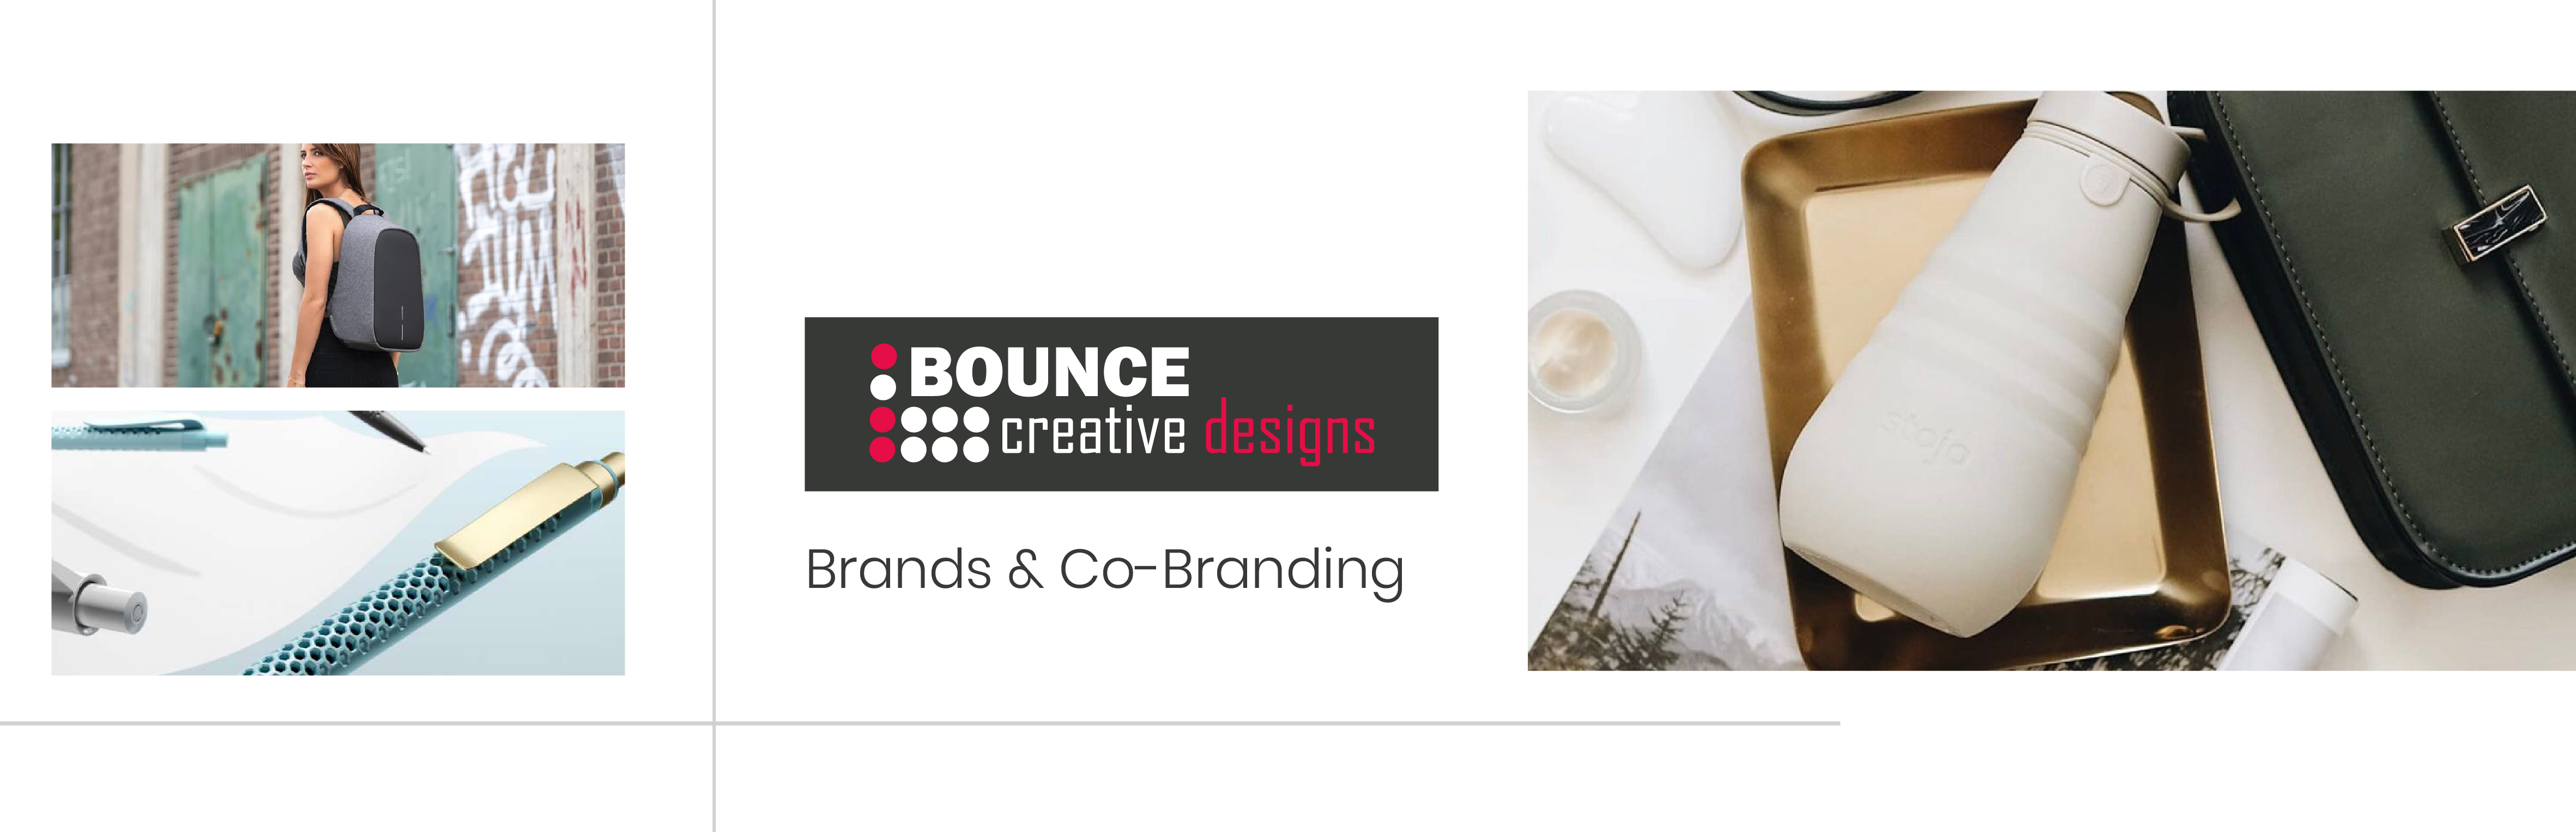 PromoBrand_Bounce_Creative_Designs